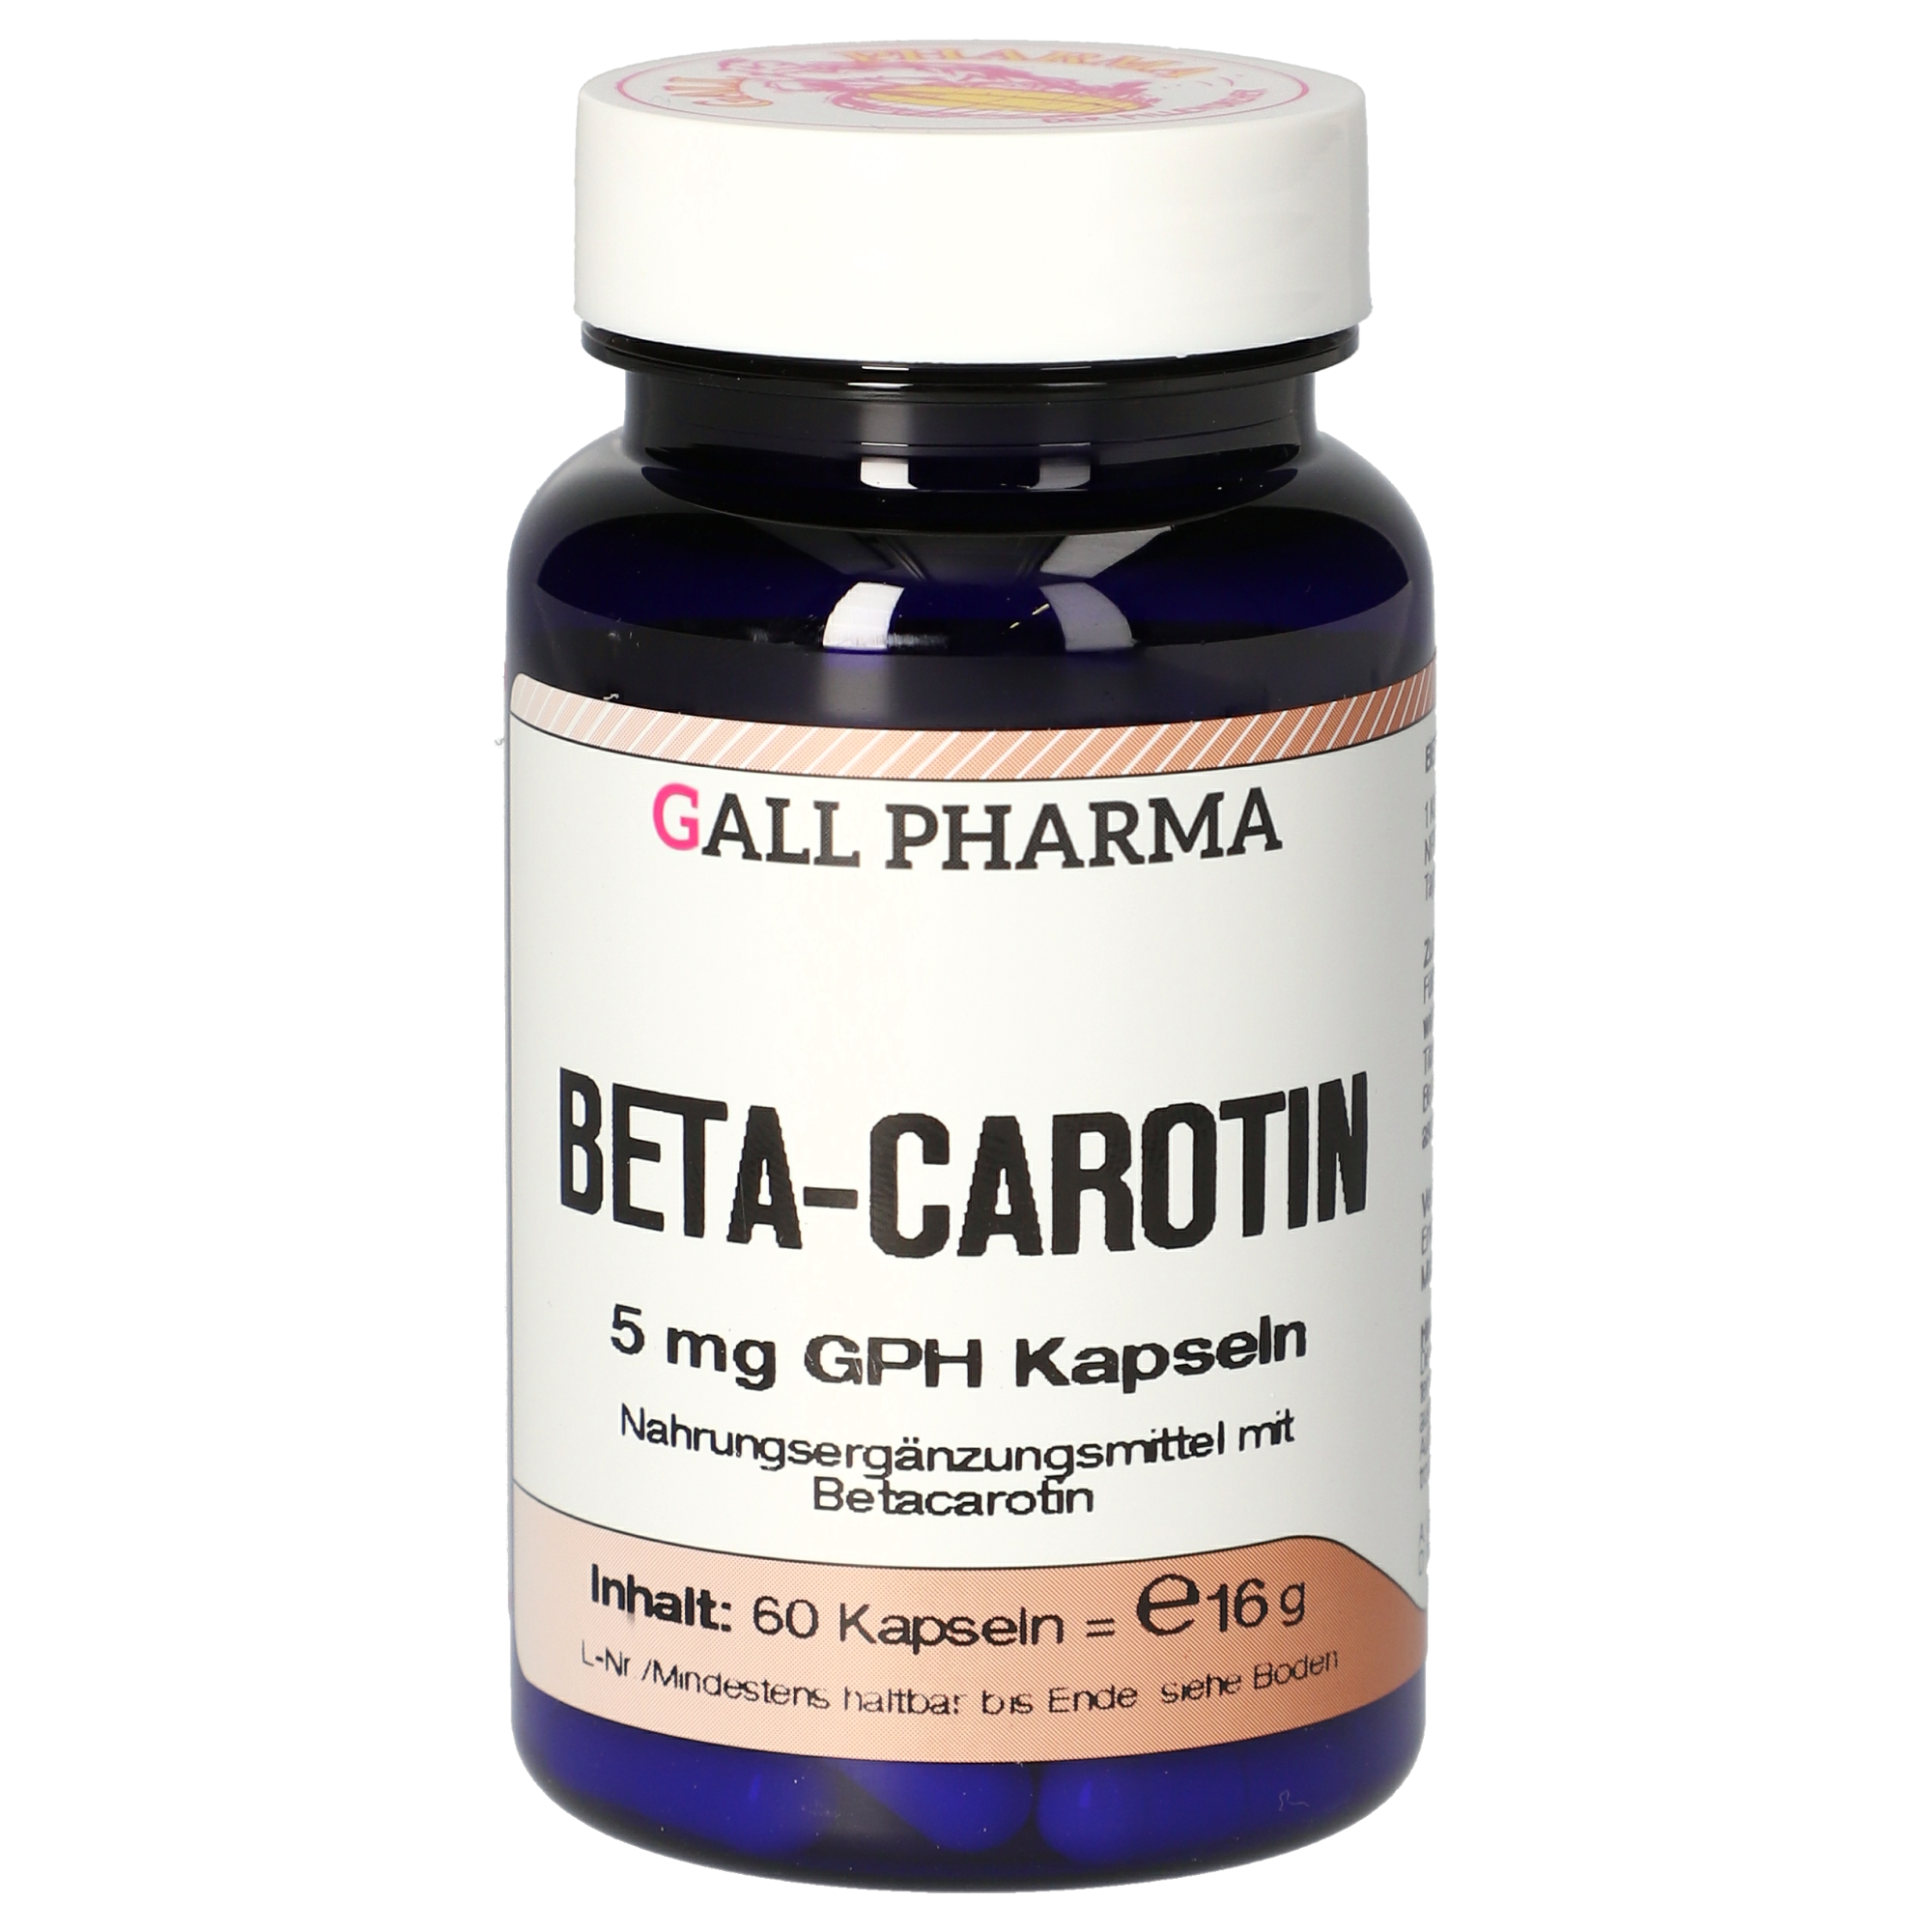 Beta-Carotin 5 mg GPH Kapseln